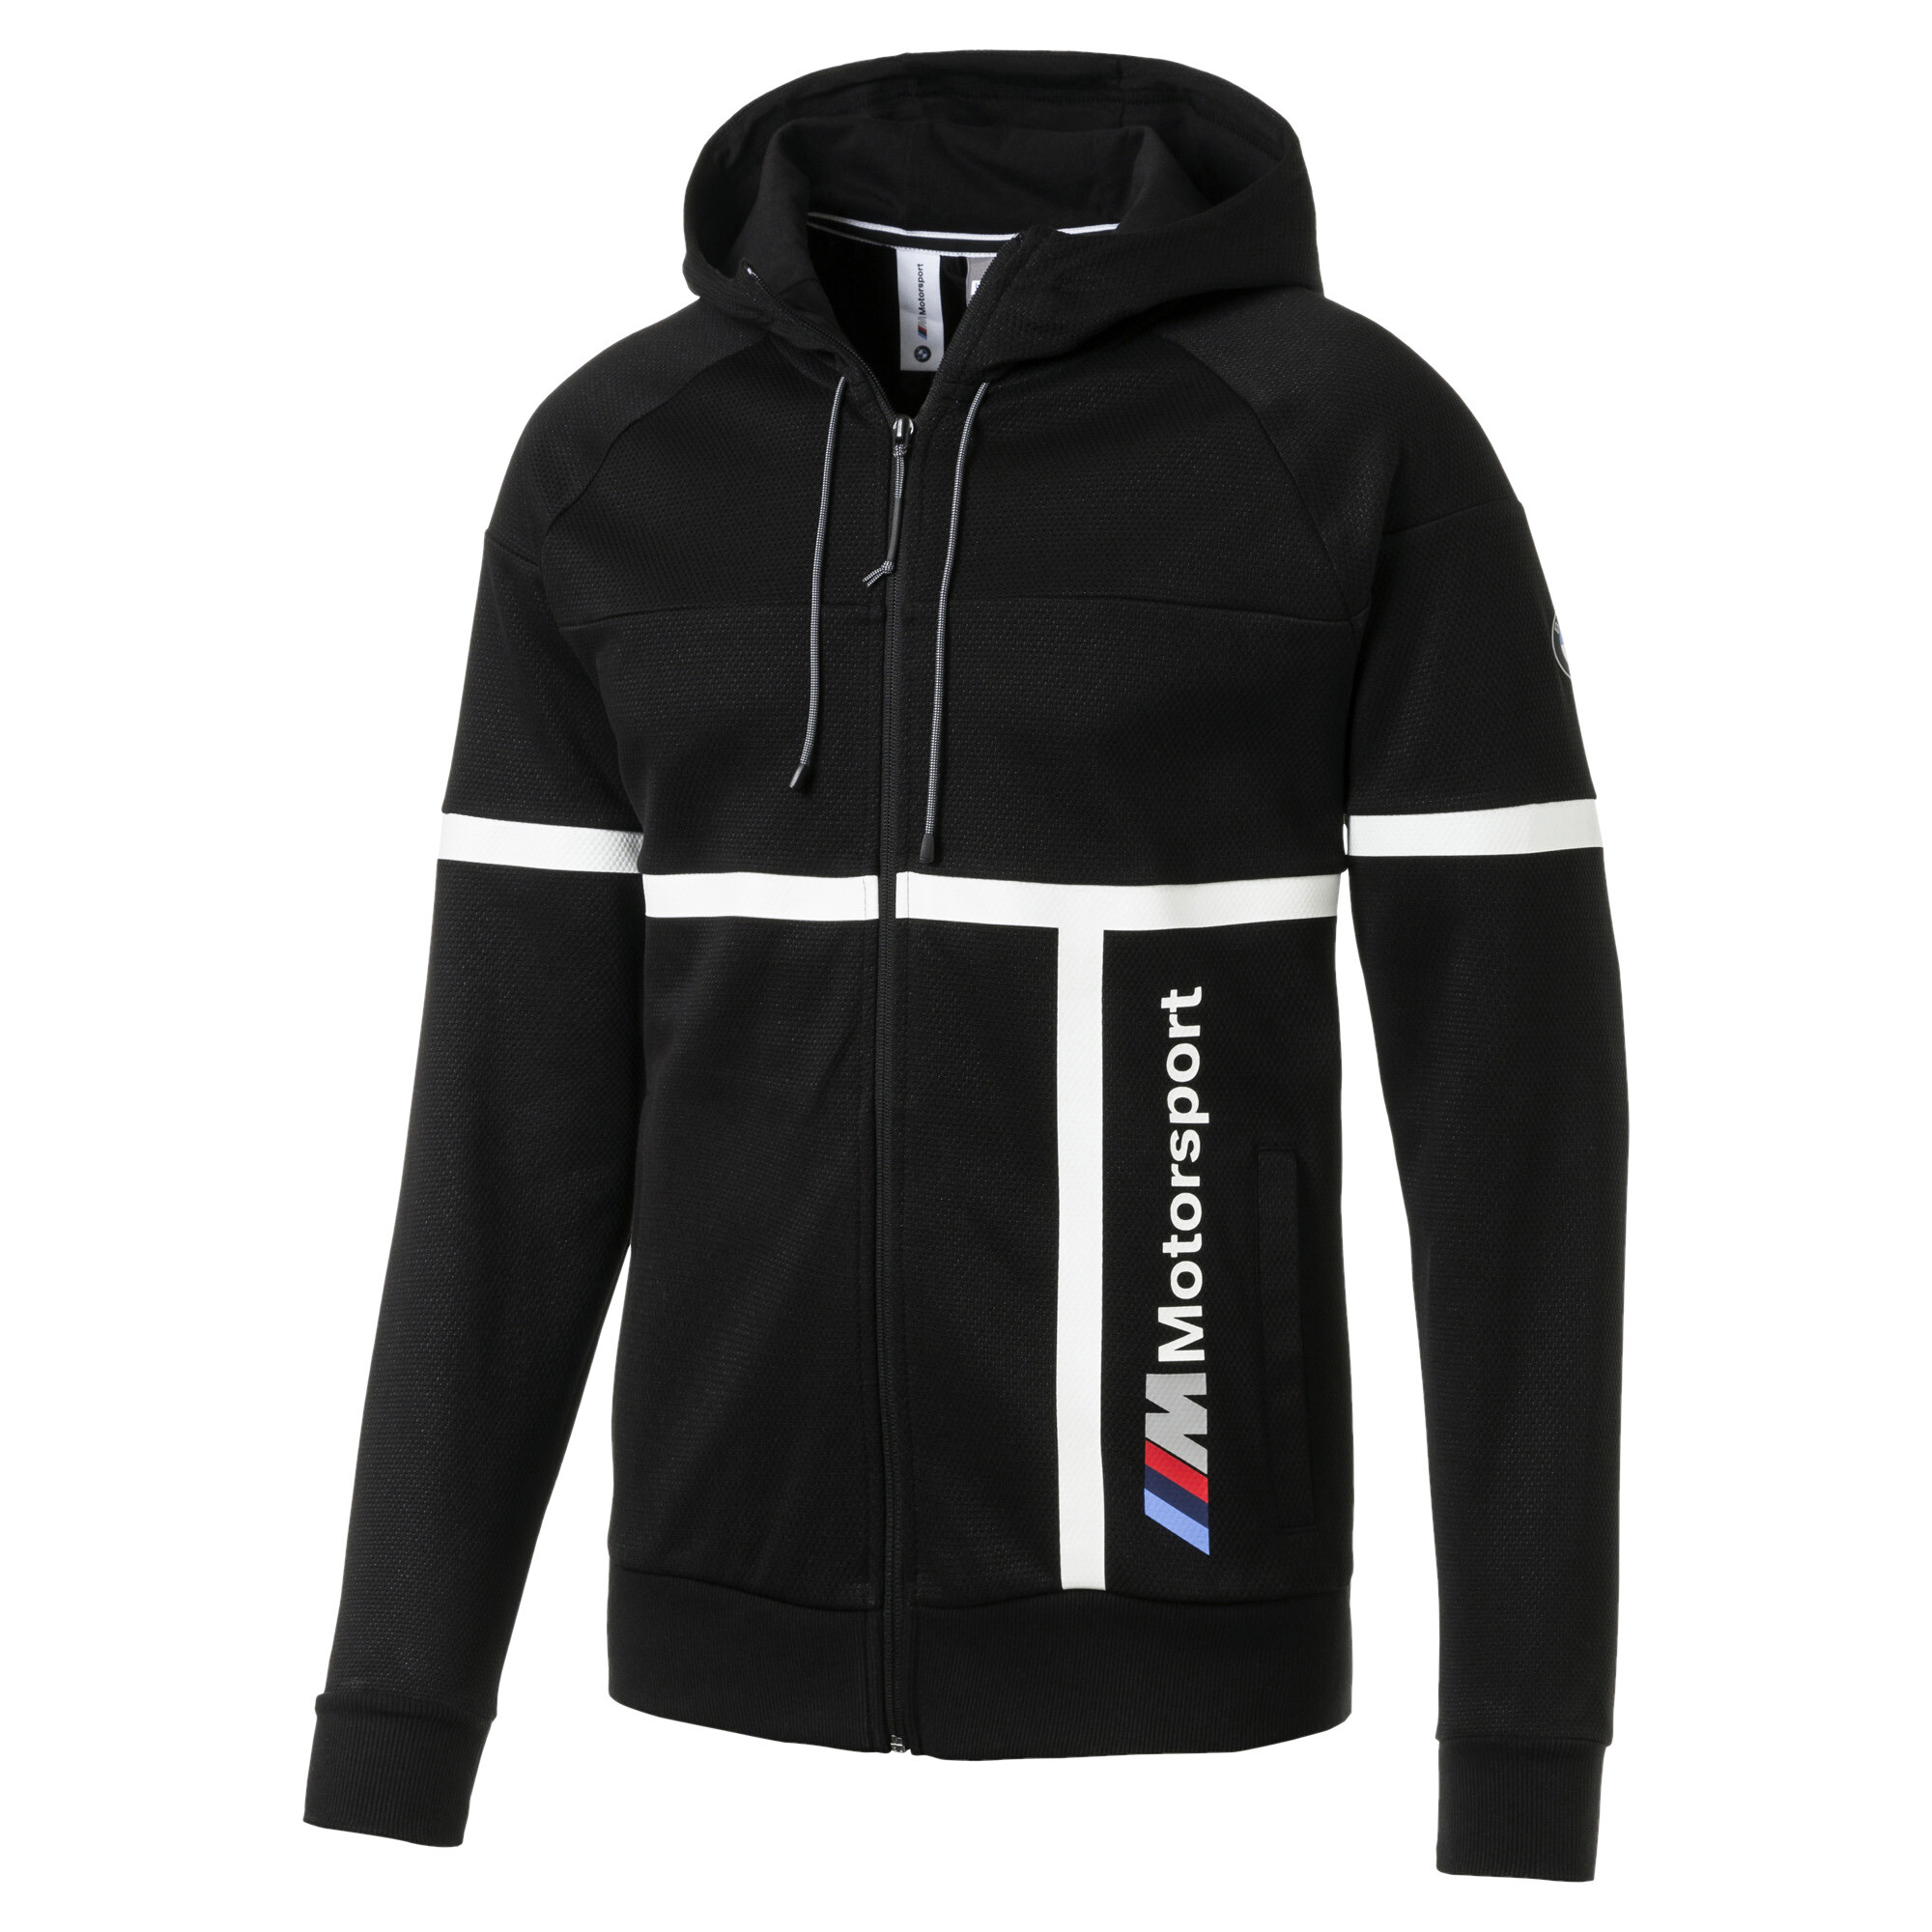 puma bmw motorsport jacket price